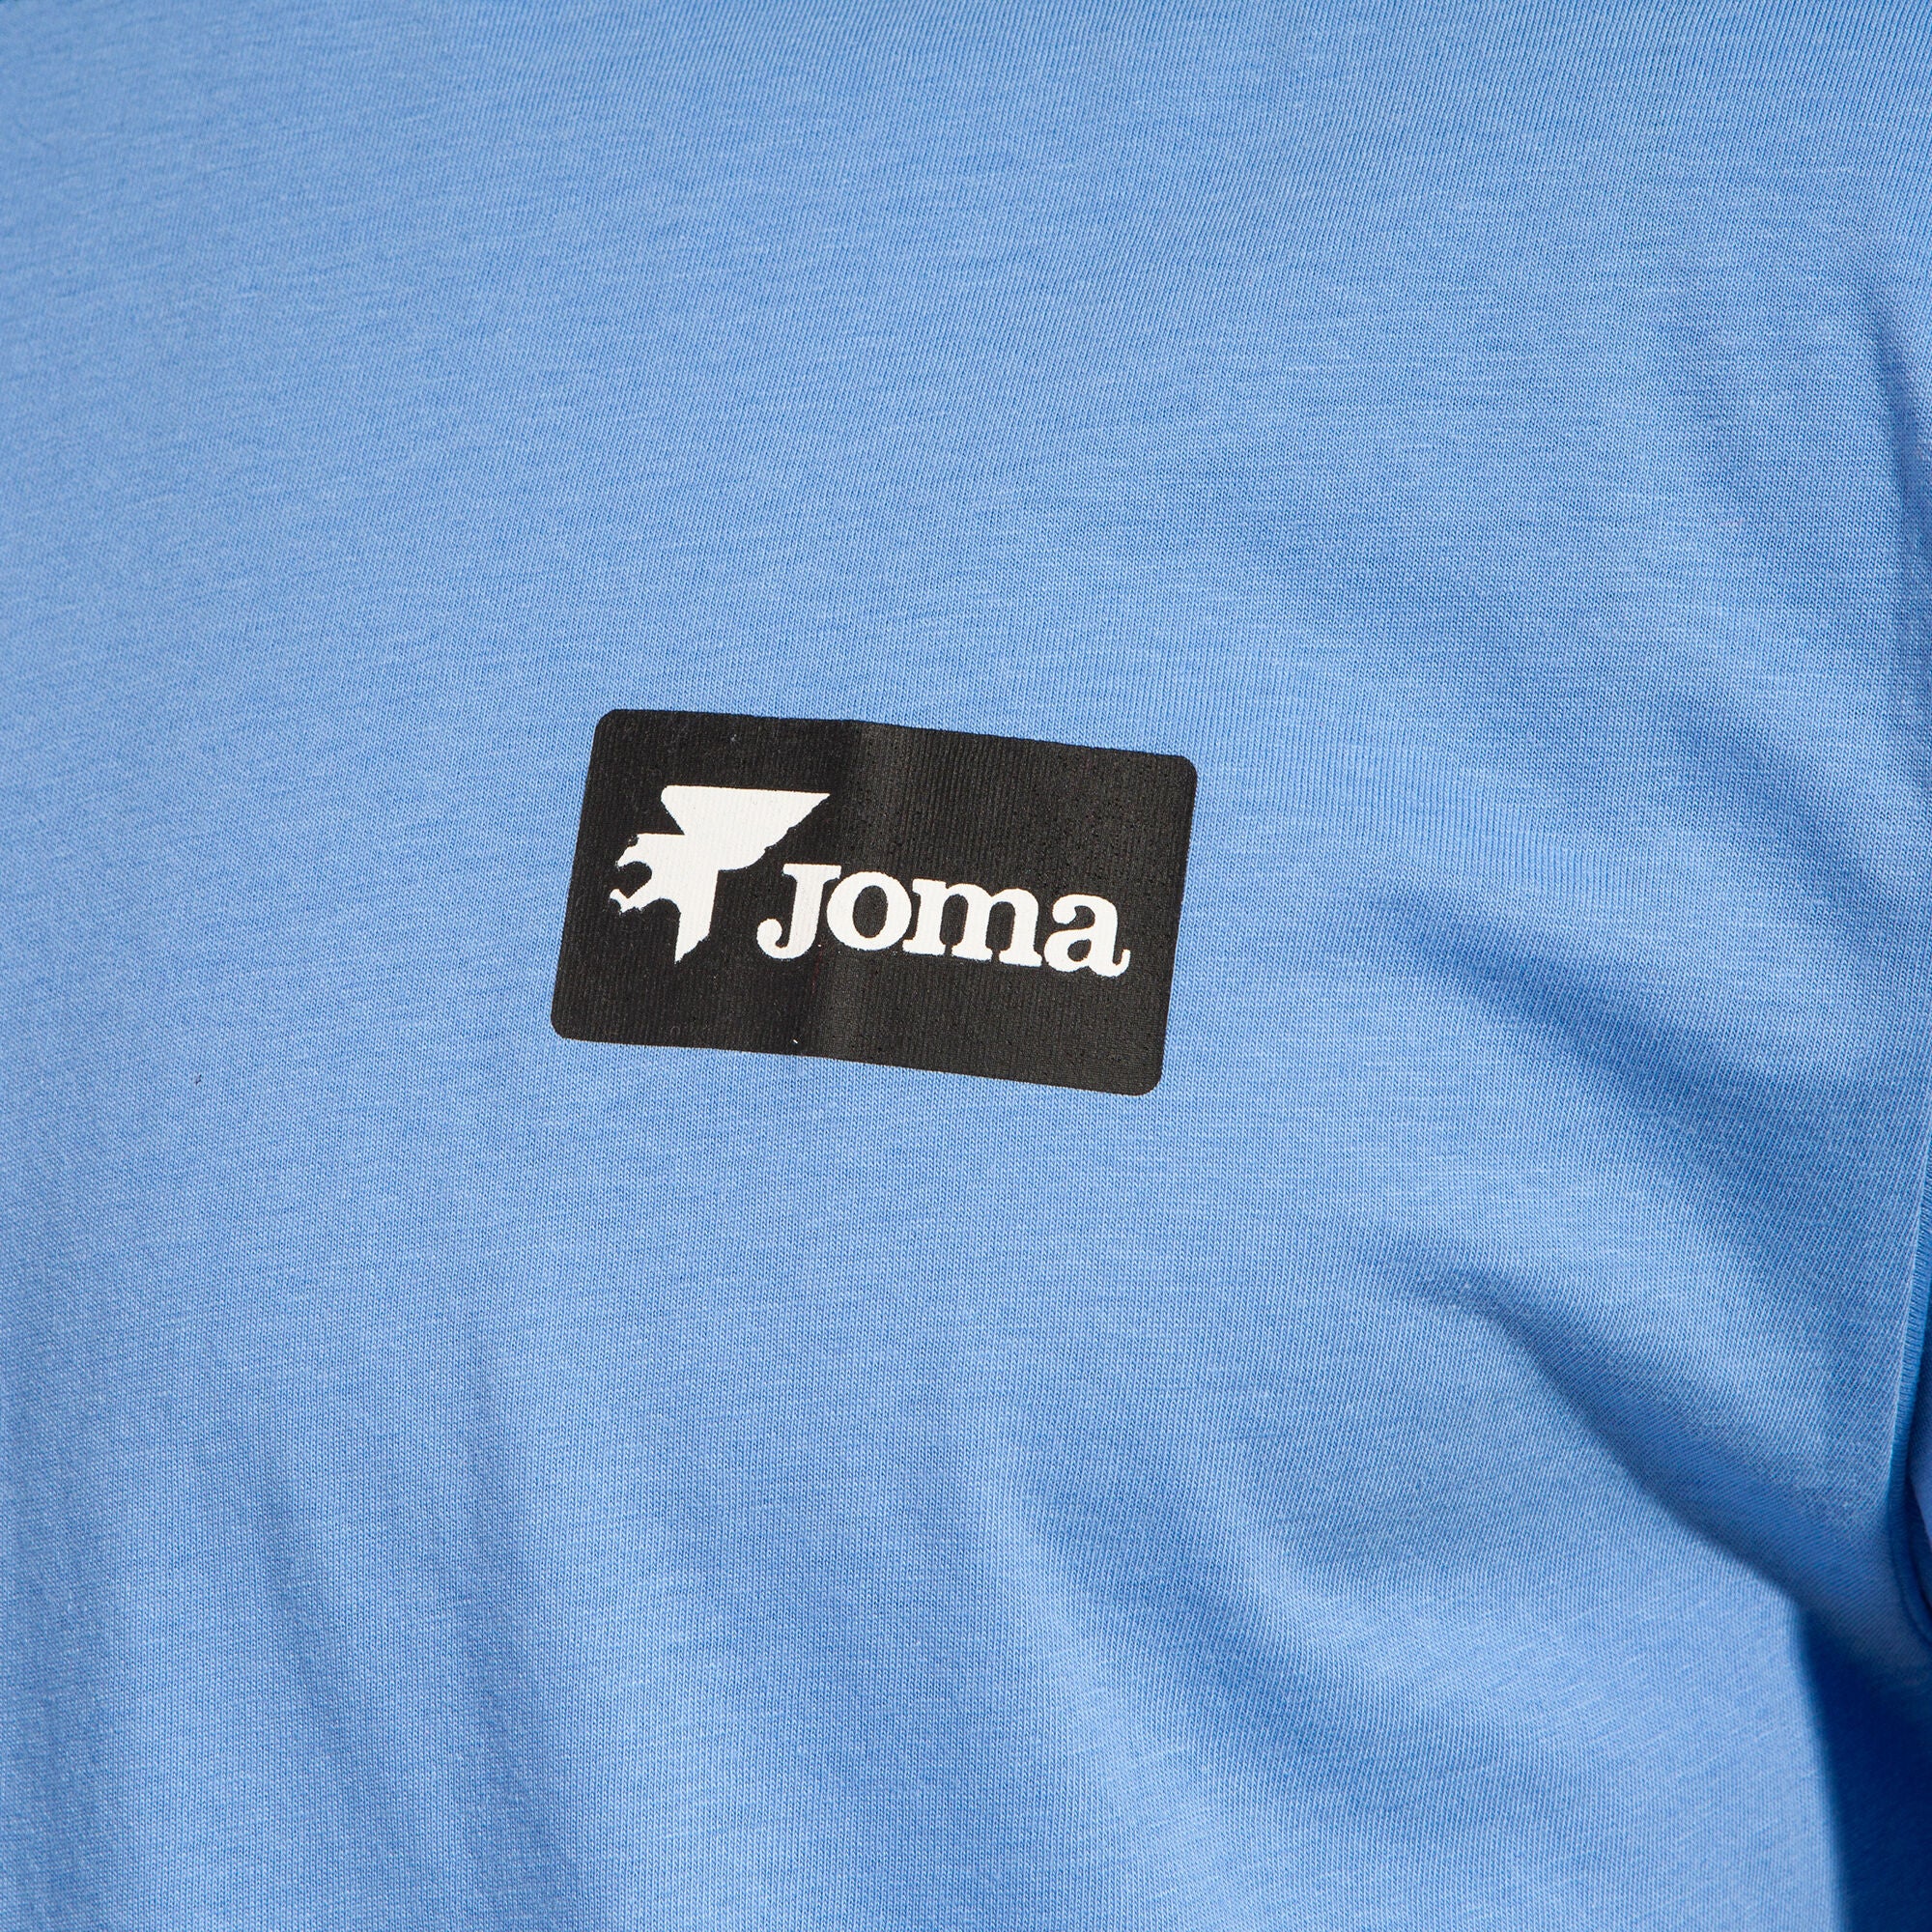 Joma California Round Neck T-shirt-2365-Sky